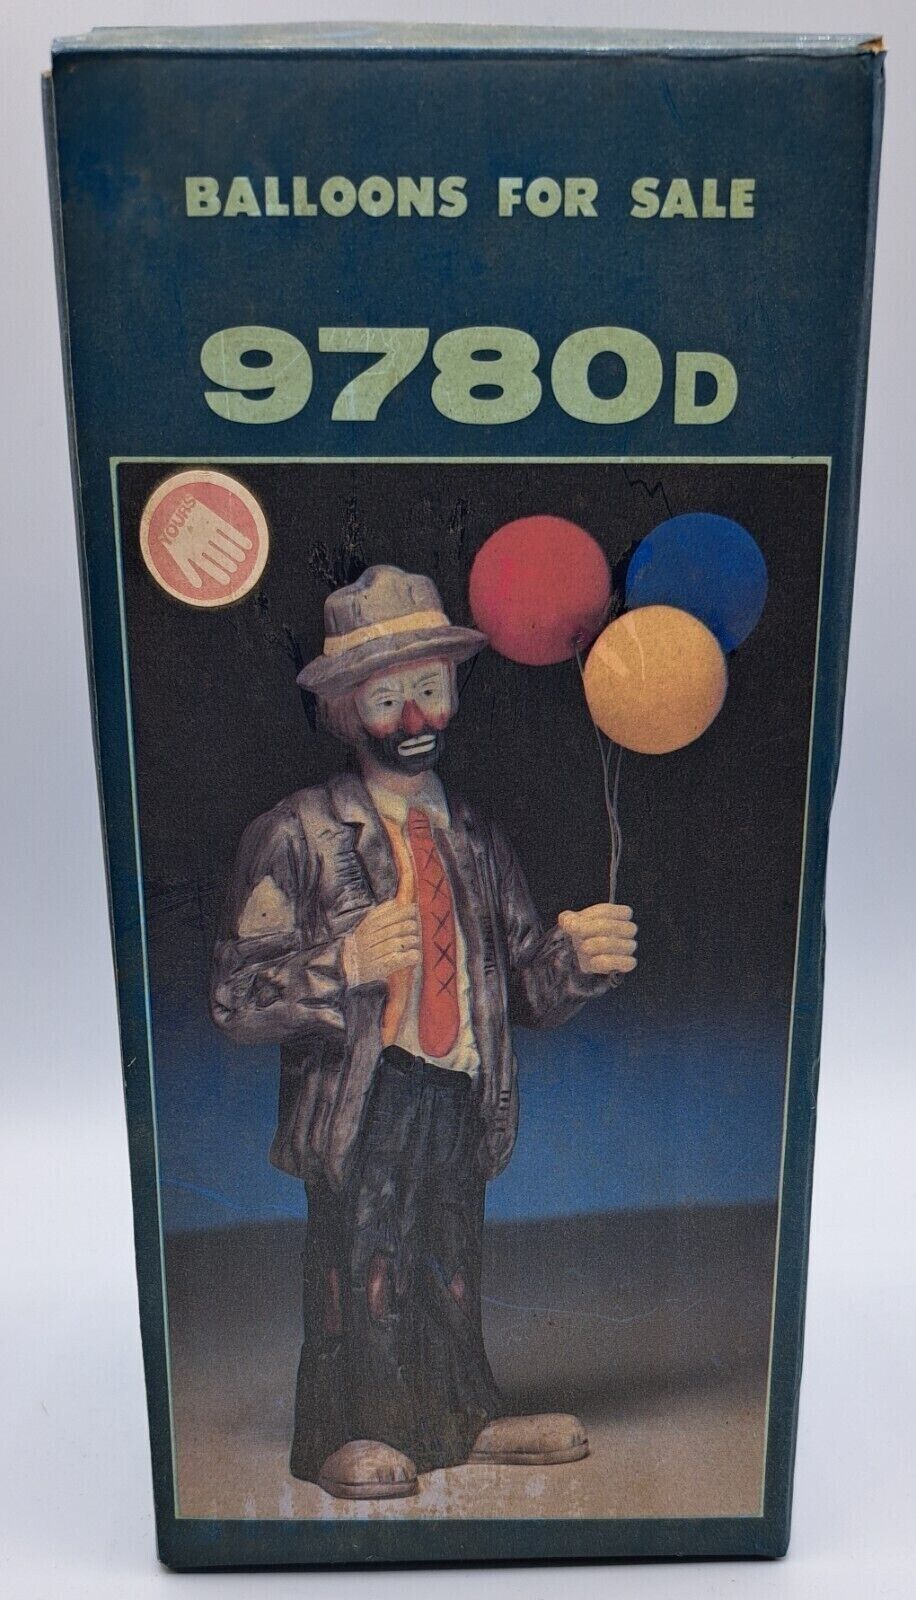 Emmett Kelly Jr. Signature Collection “Balloons For Sale” 1986 VINTAGE #9780d